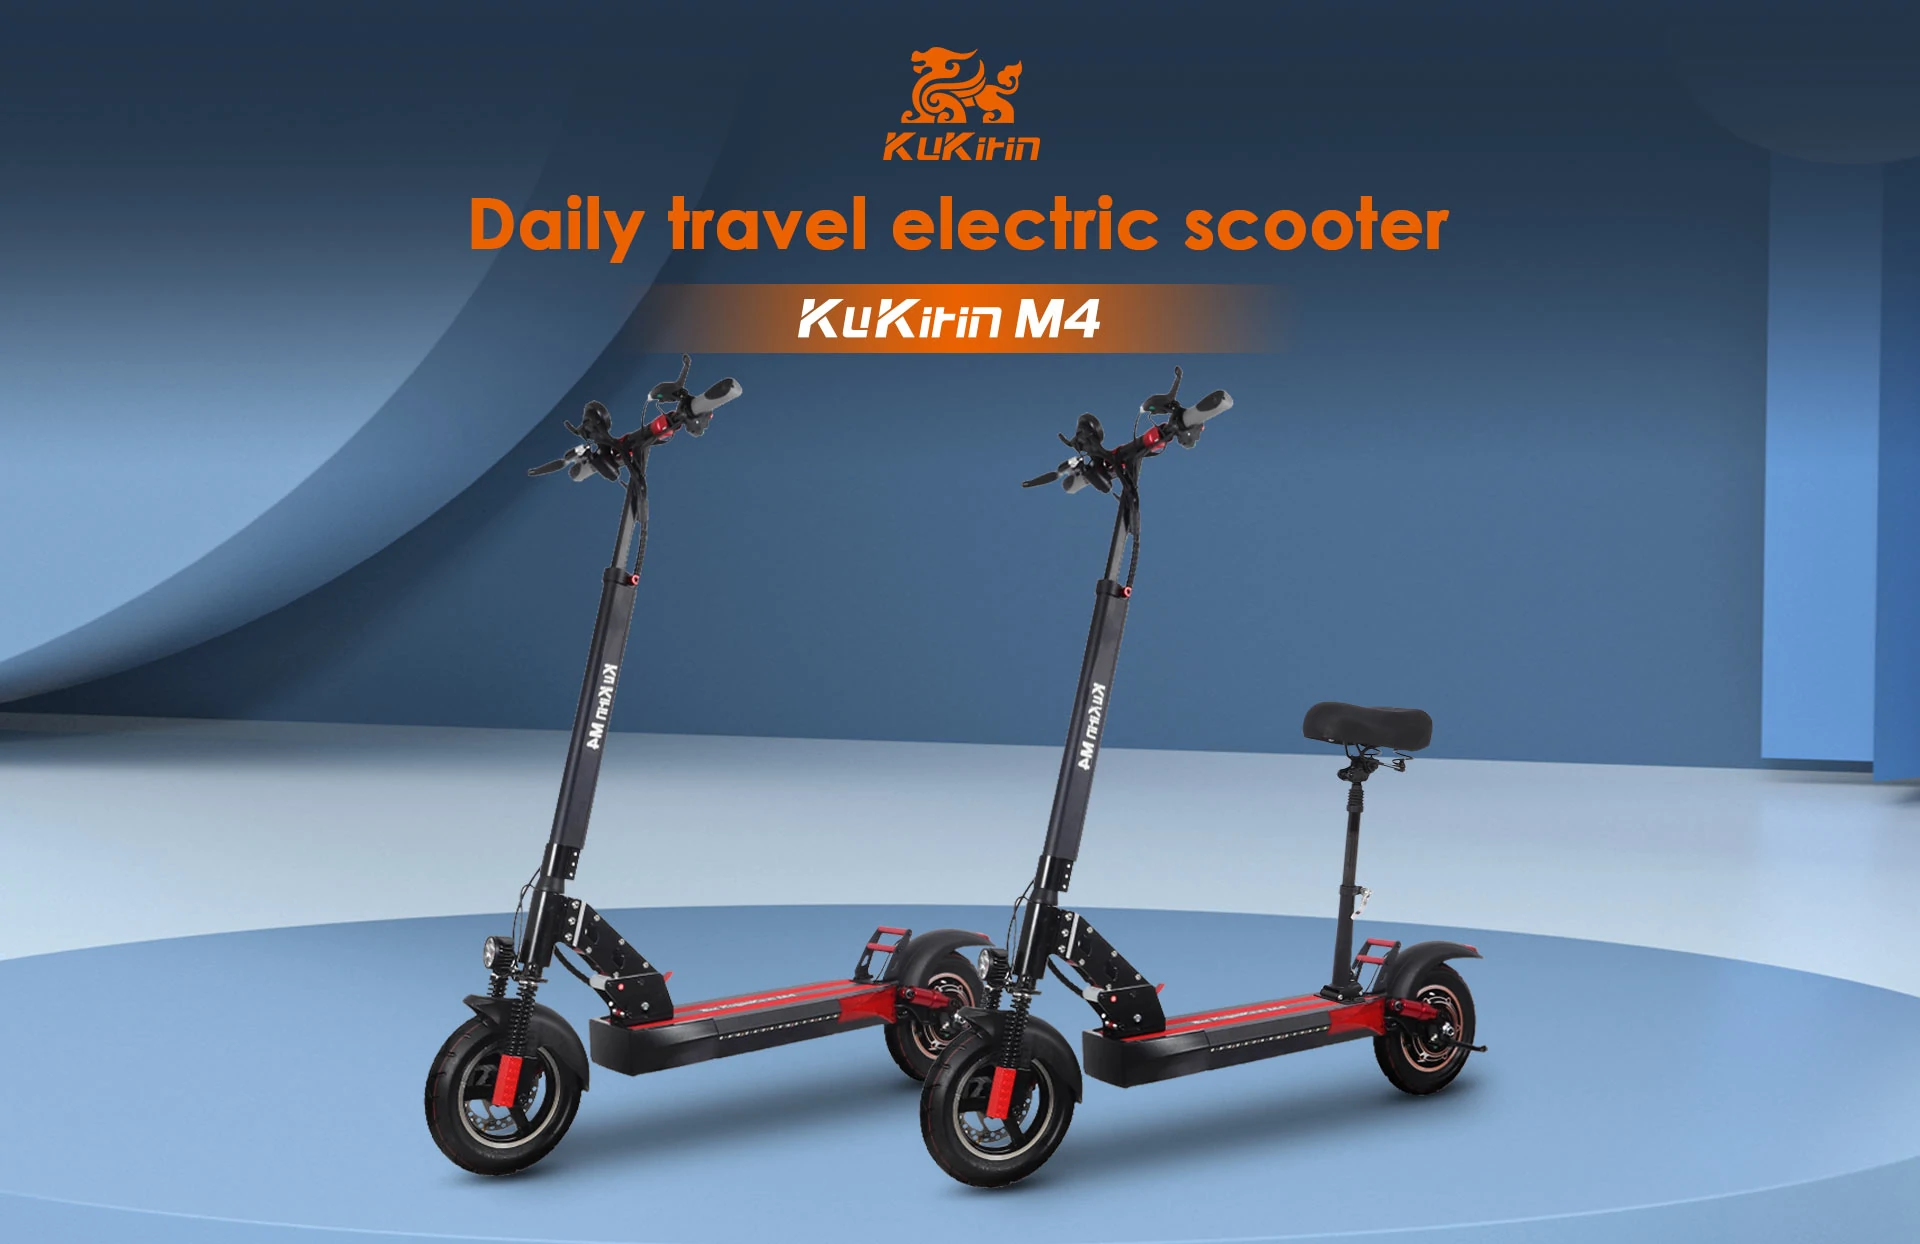 Kukirin M4 electric scooter - simple, cheap, 500 watts